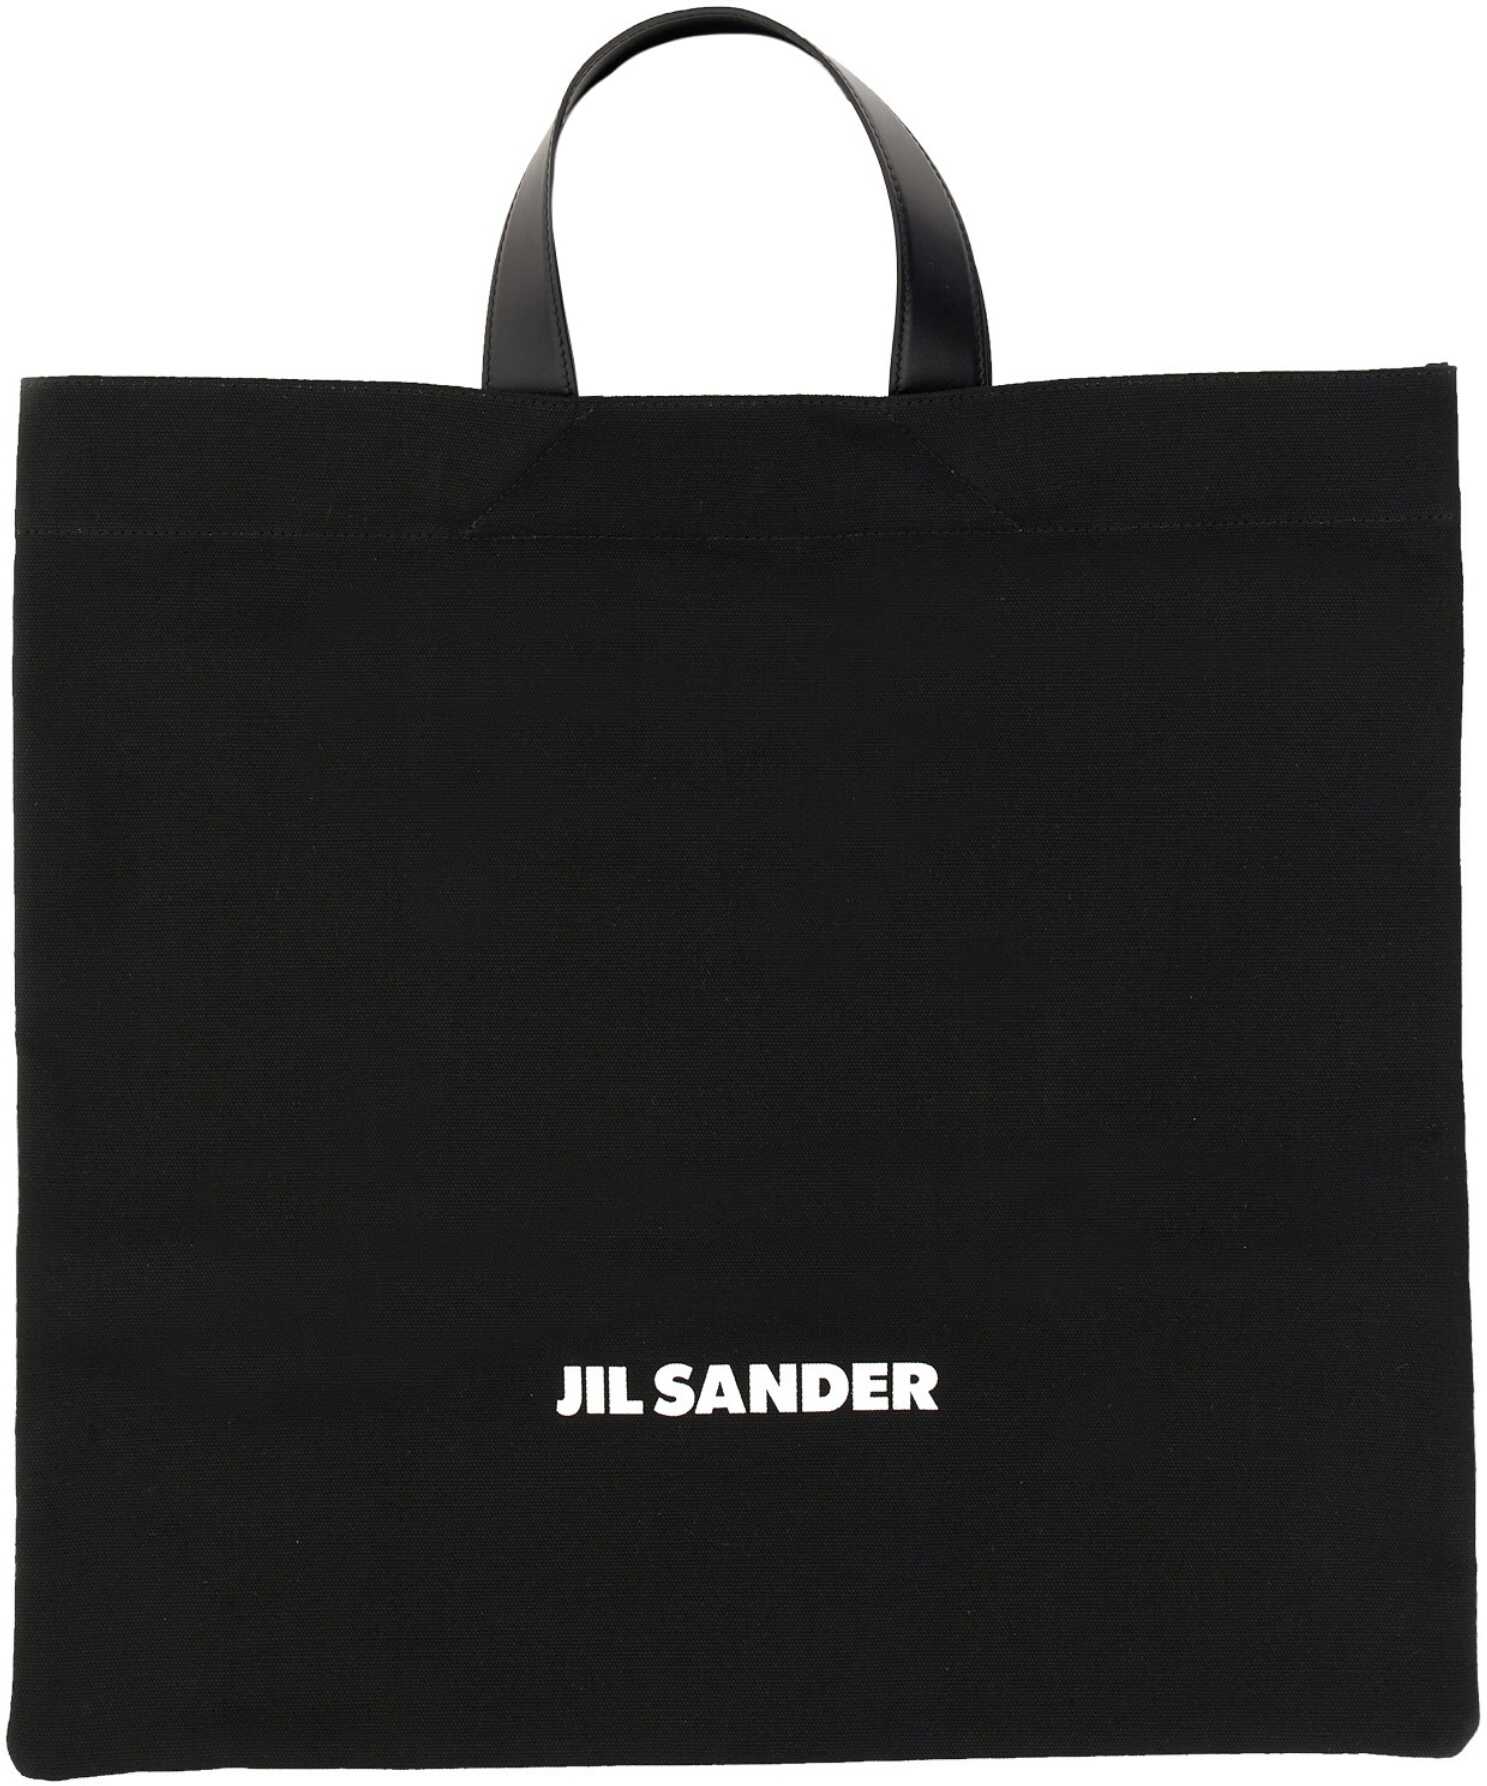 Jil Sander Medium Tote Bag BLACK